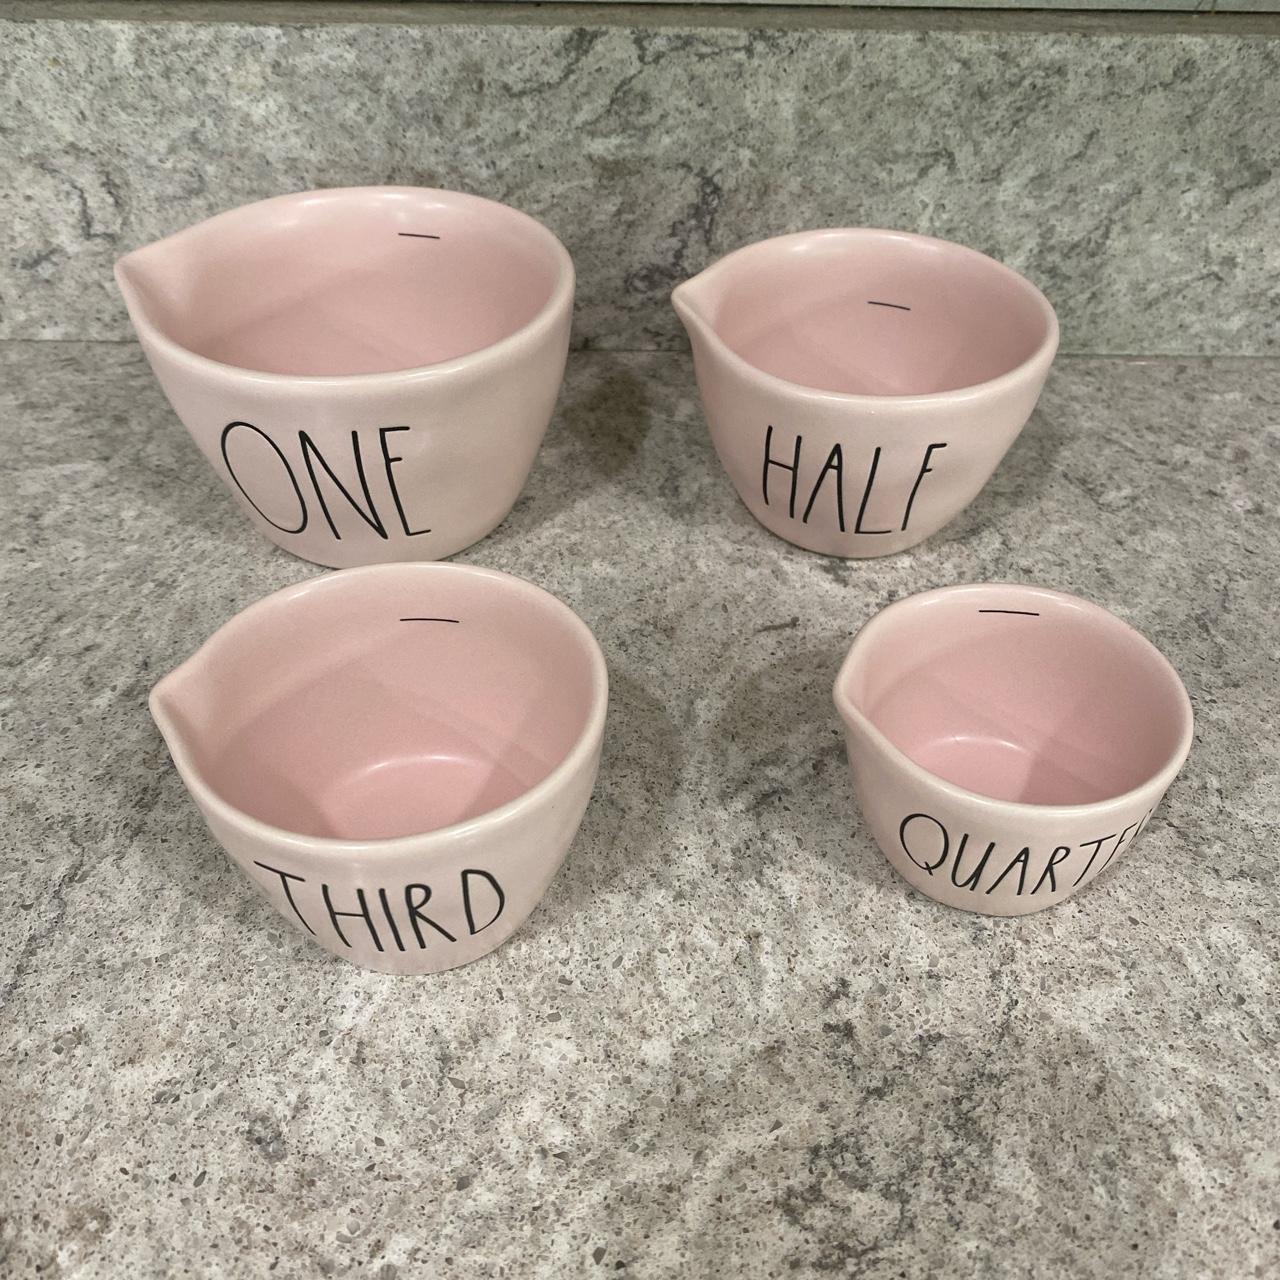 UFT Rae Dunn pink measuring cups ISO RD 🐄🐖🐓 Farm - Depop